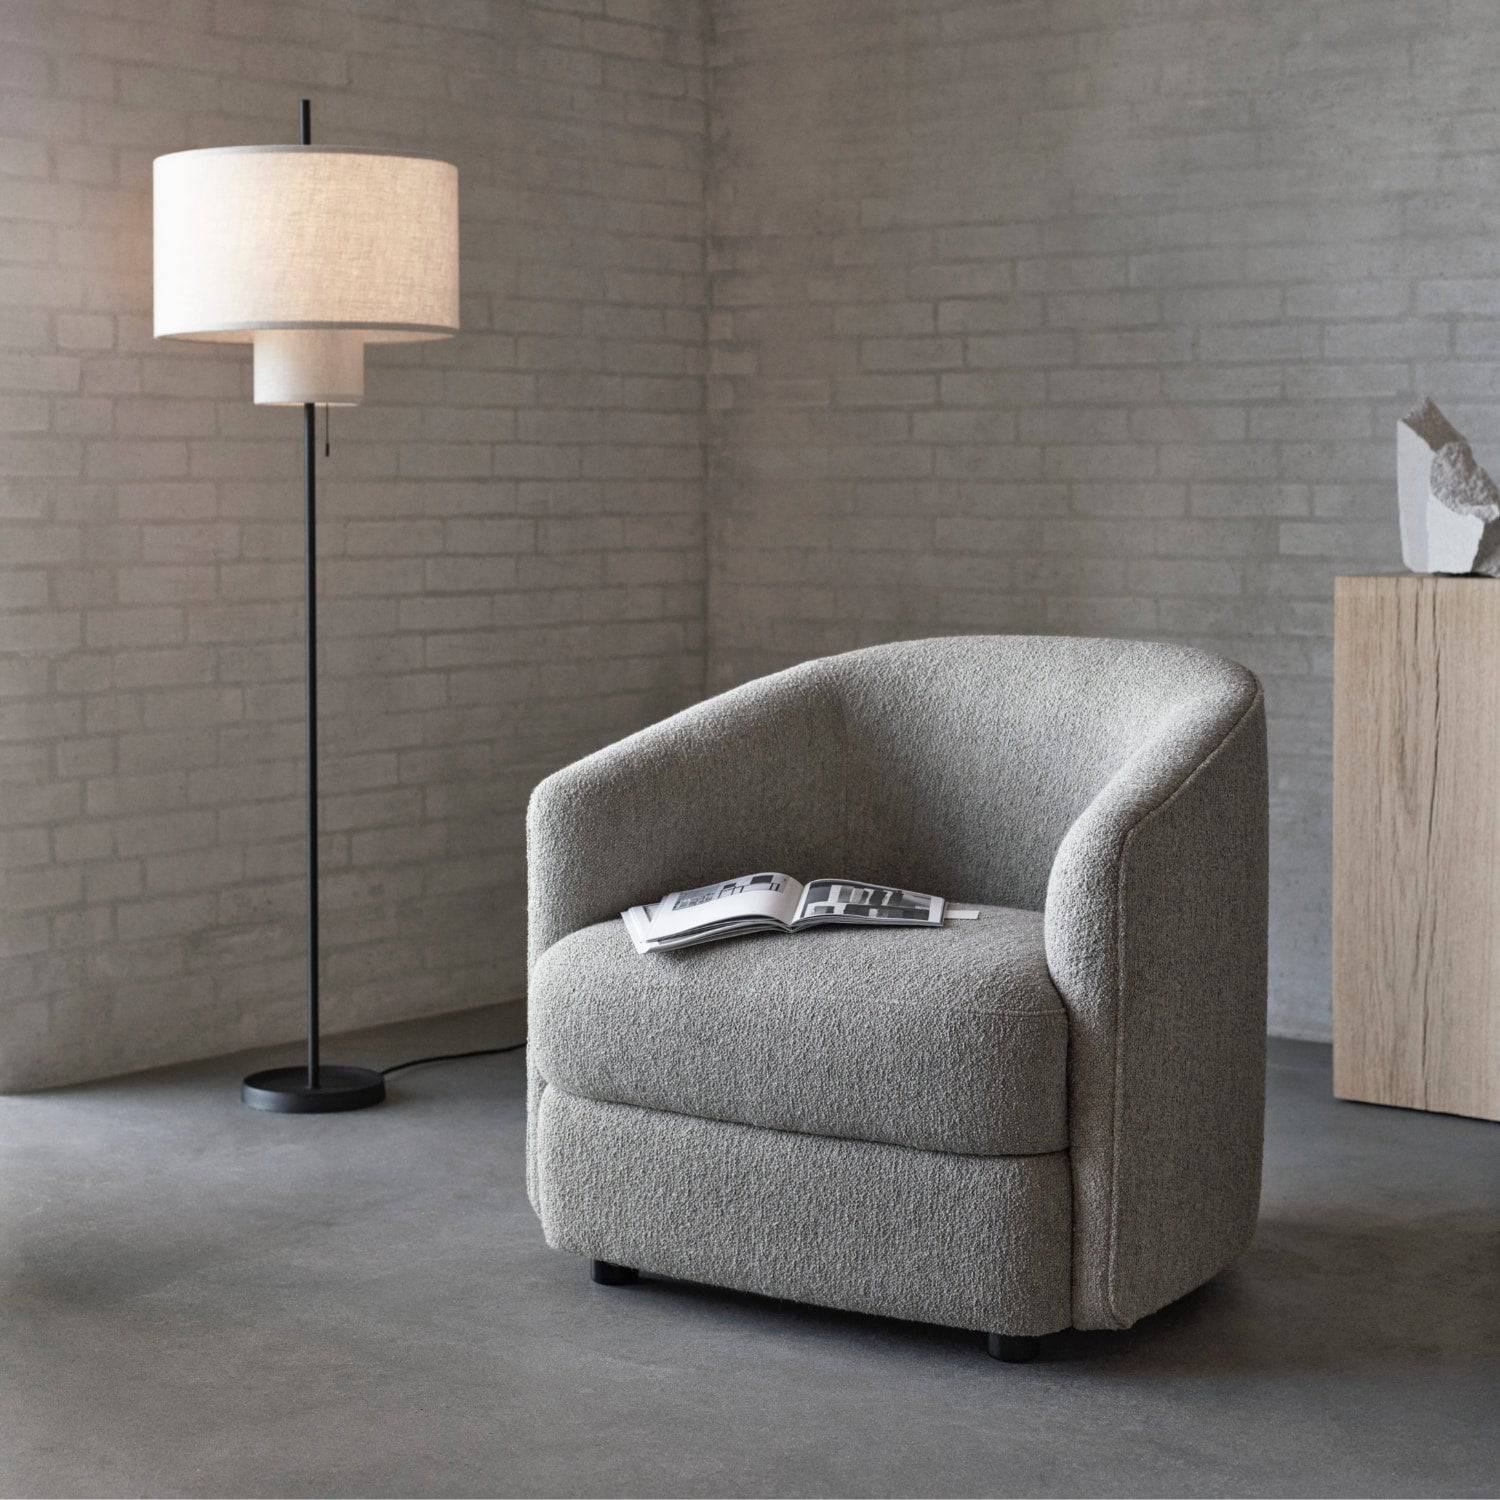 New Works Covent Lounge Chair Hemp - KANSO#Upholstery_Hemp